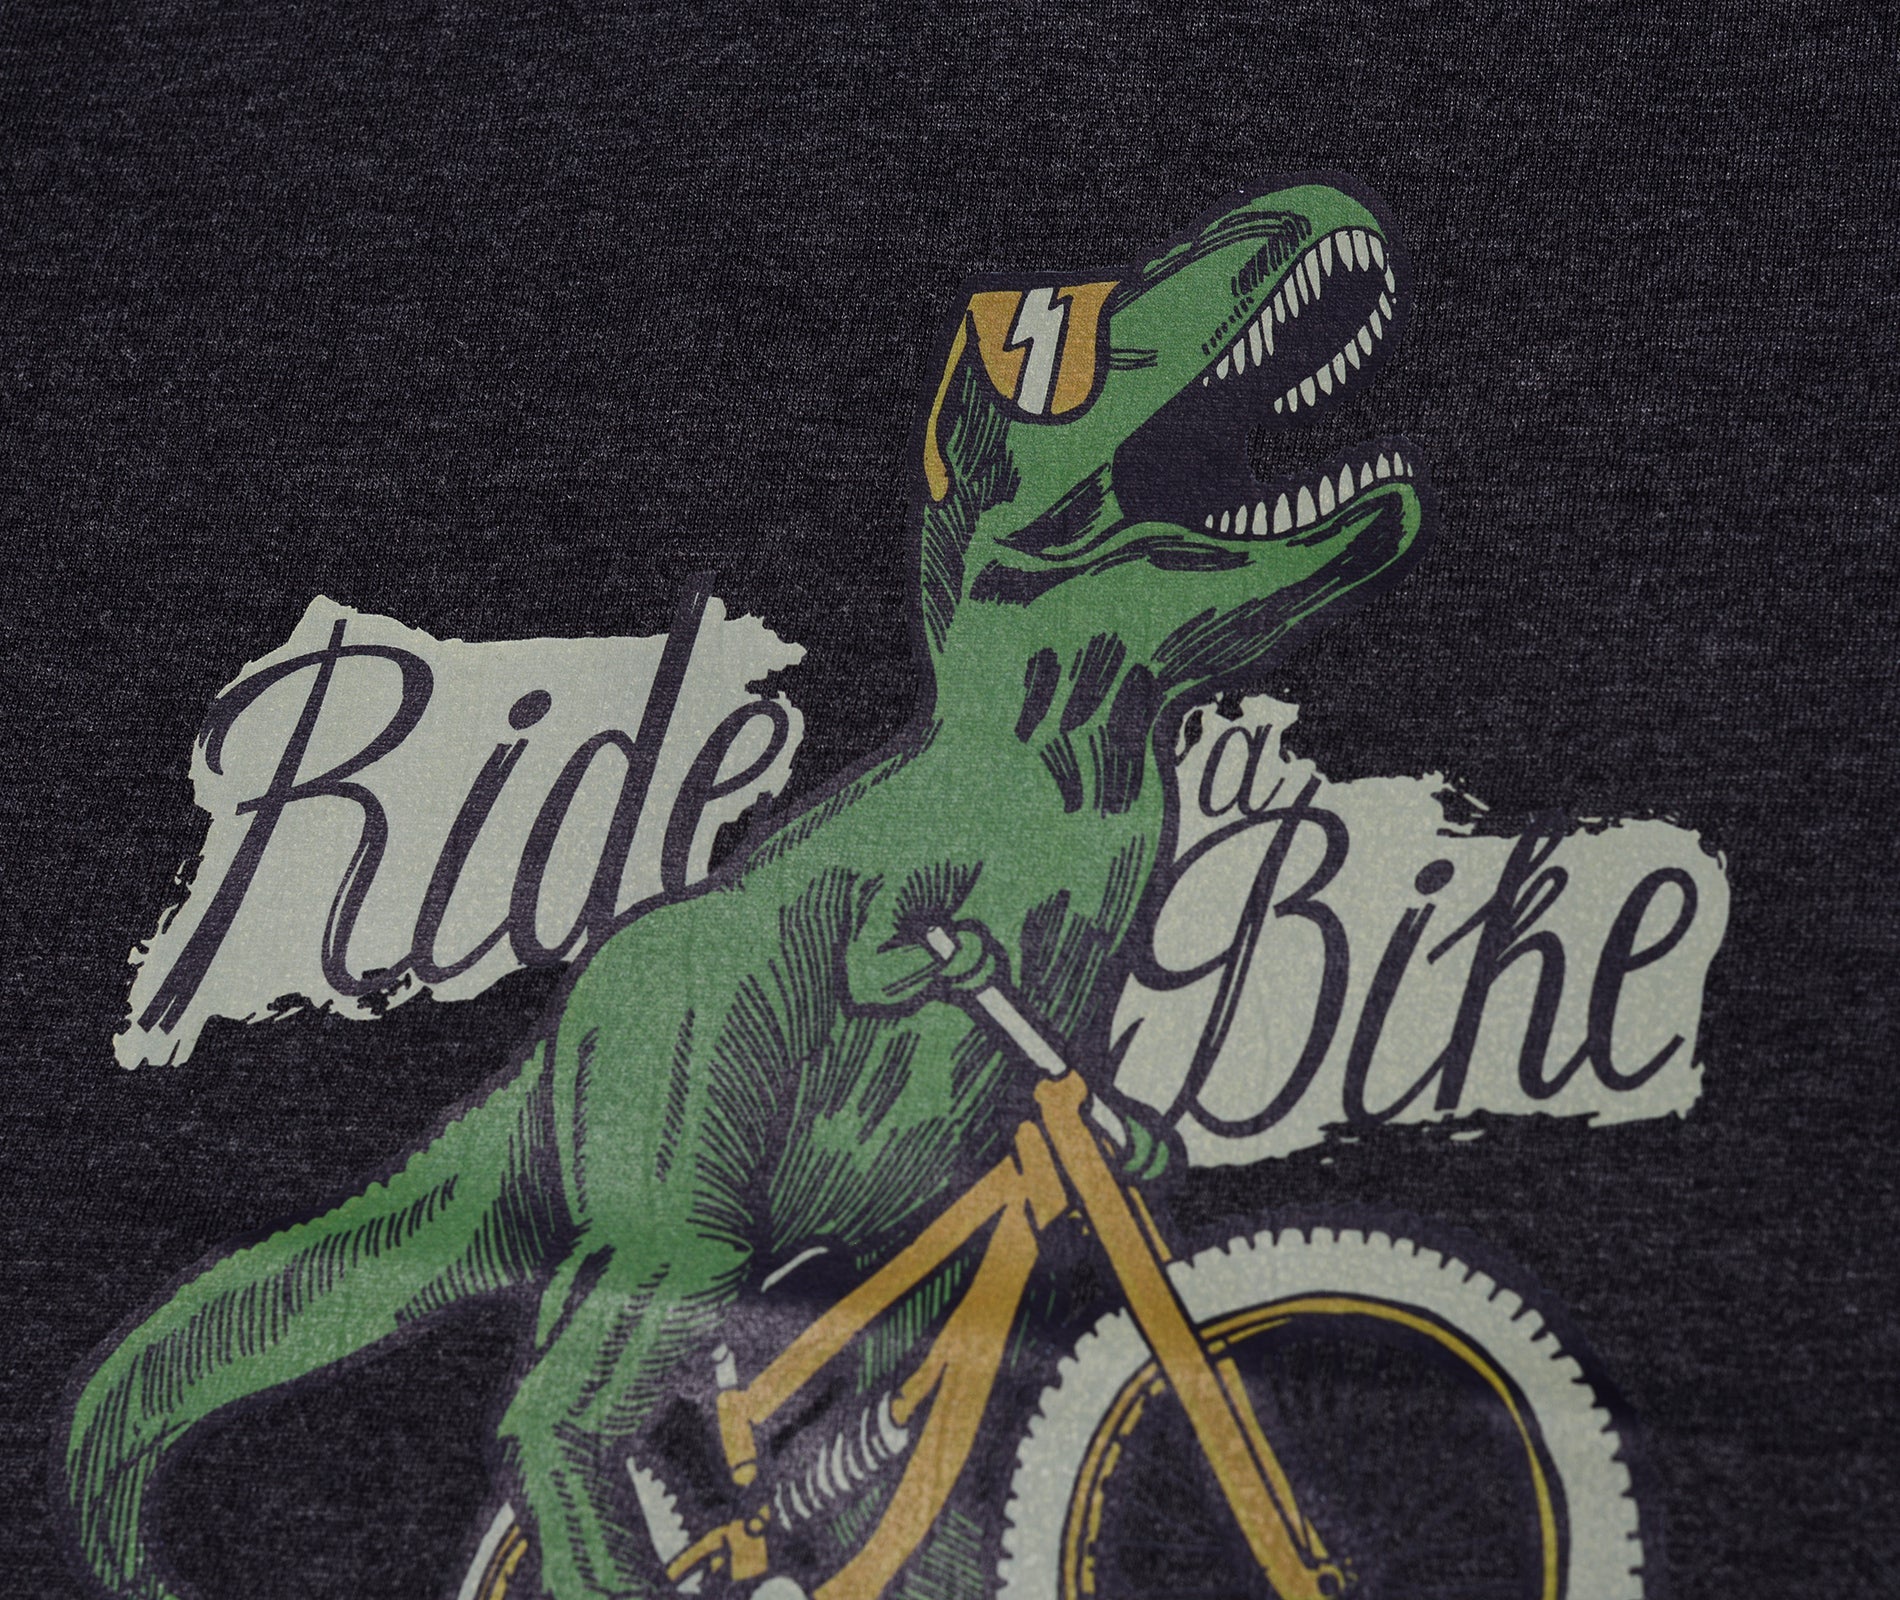 Dino Bike Kids T-Shirt